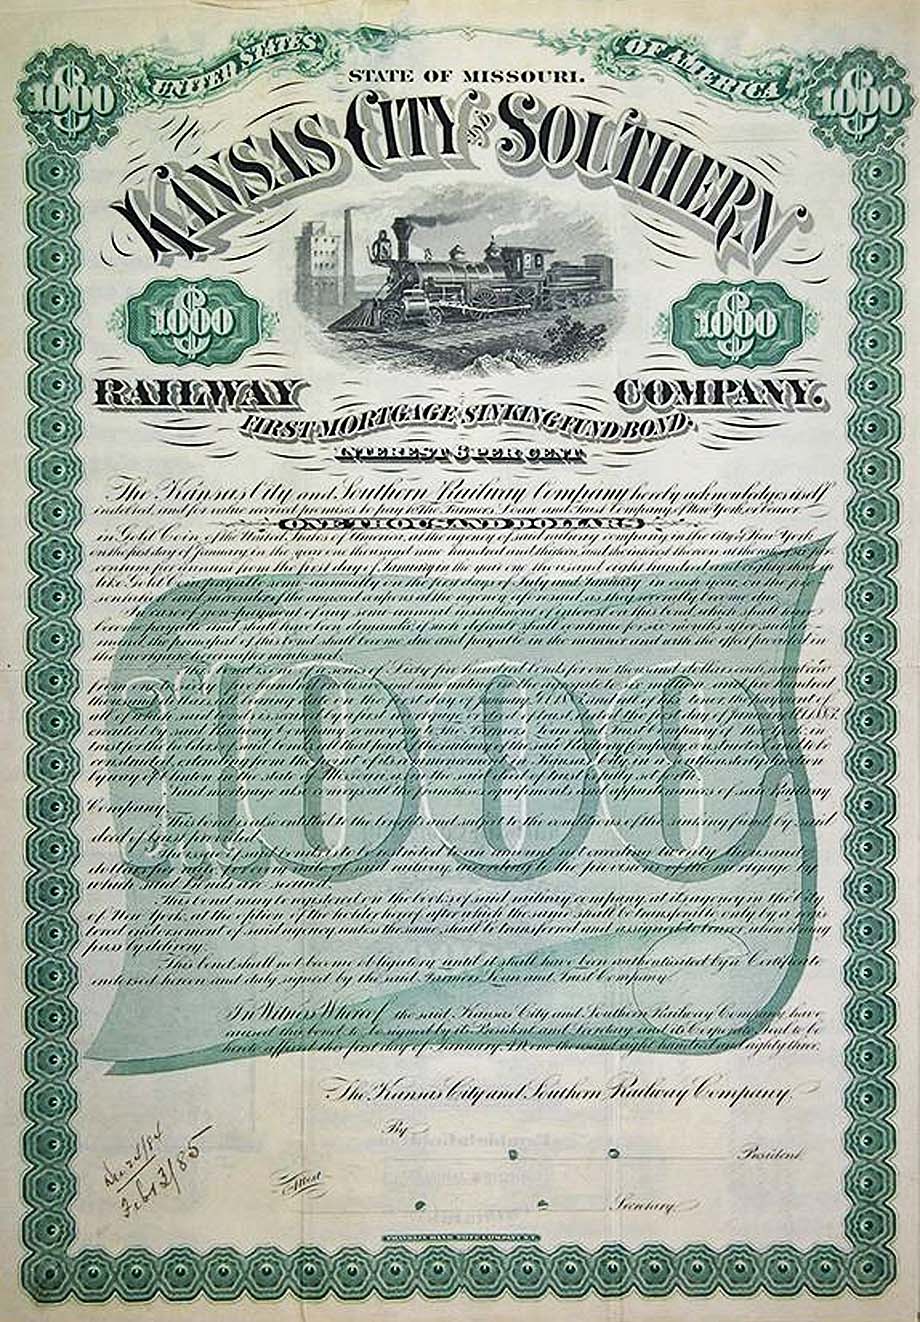 A Kansas City Southern Railway bond.